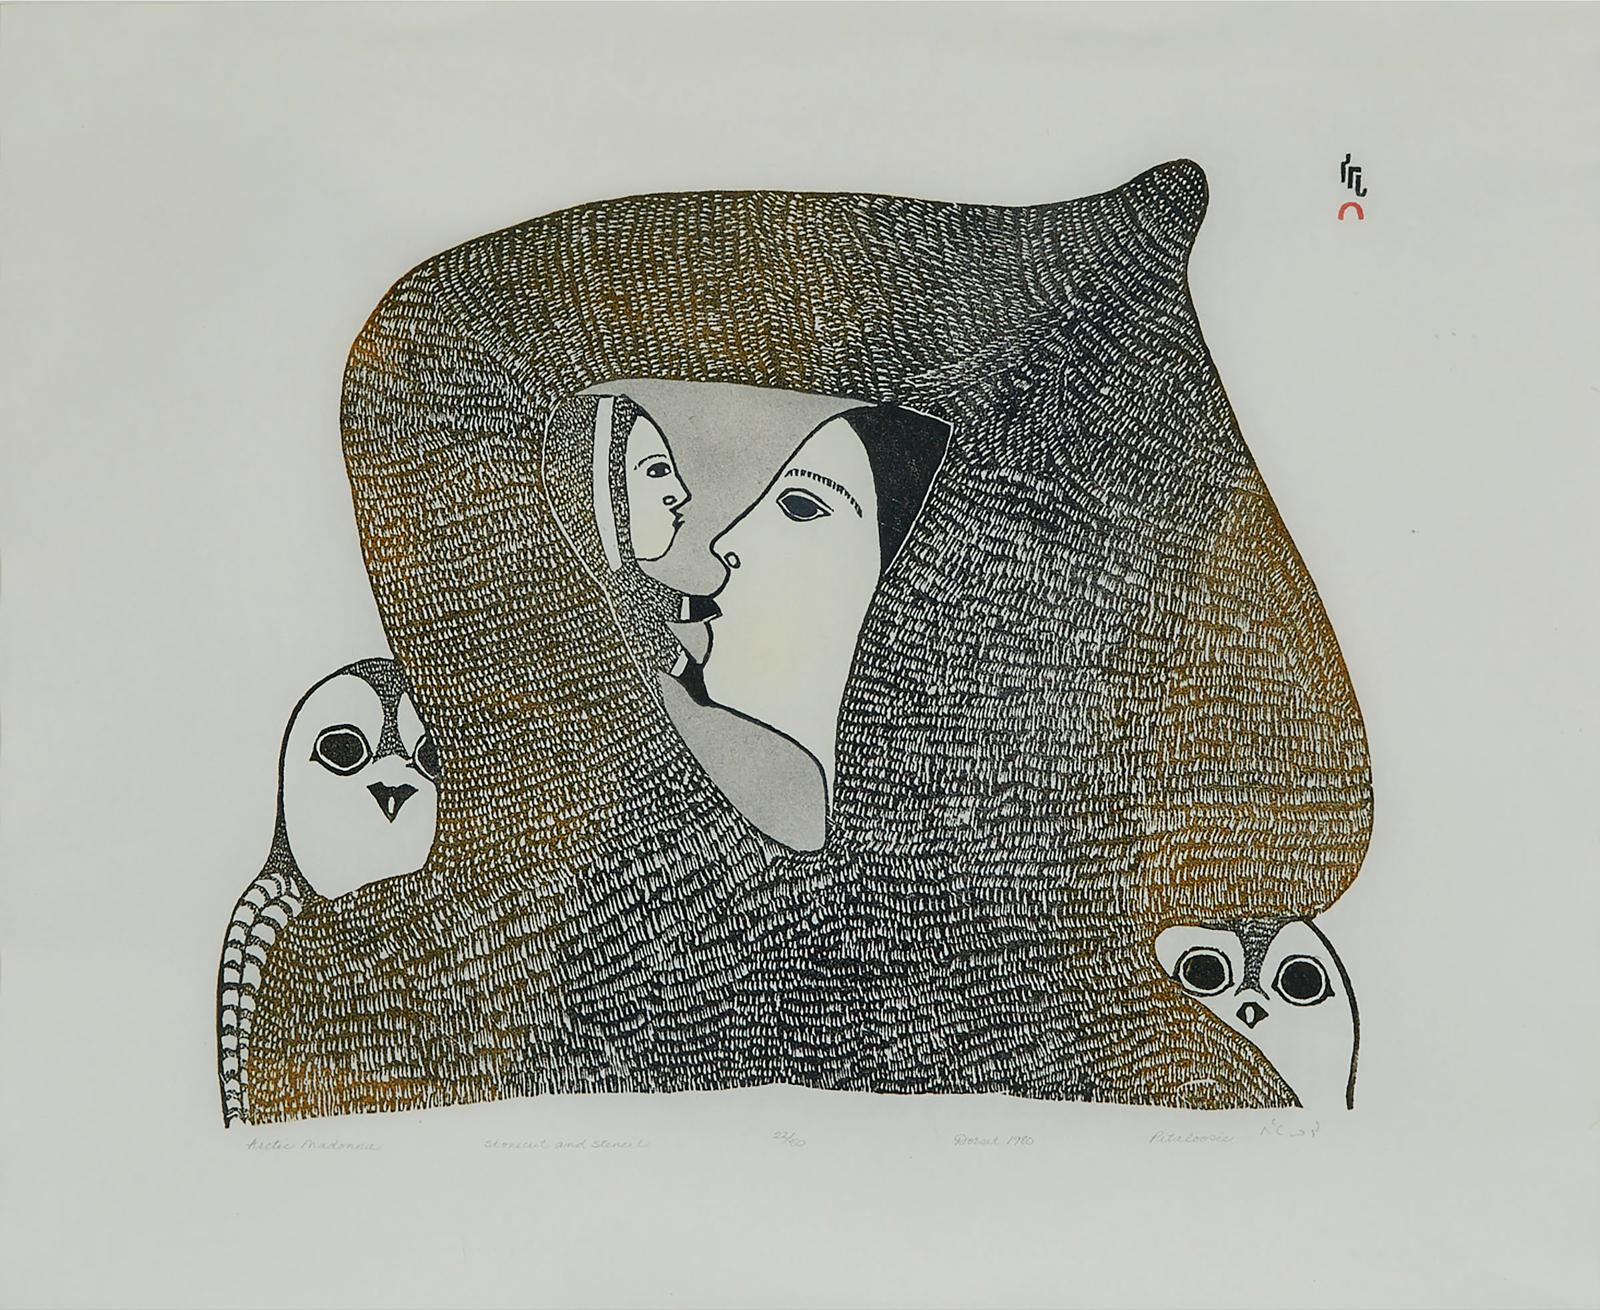 Pitaloosie Saila (1942-2021) - Arctic Madonna